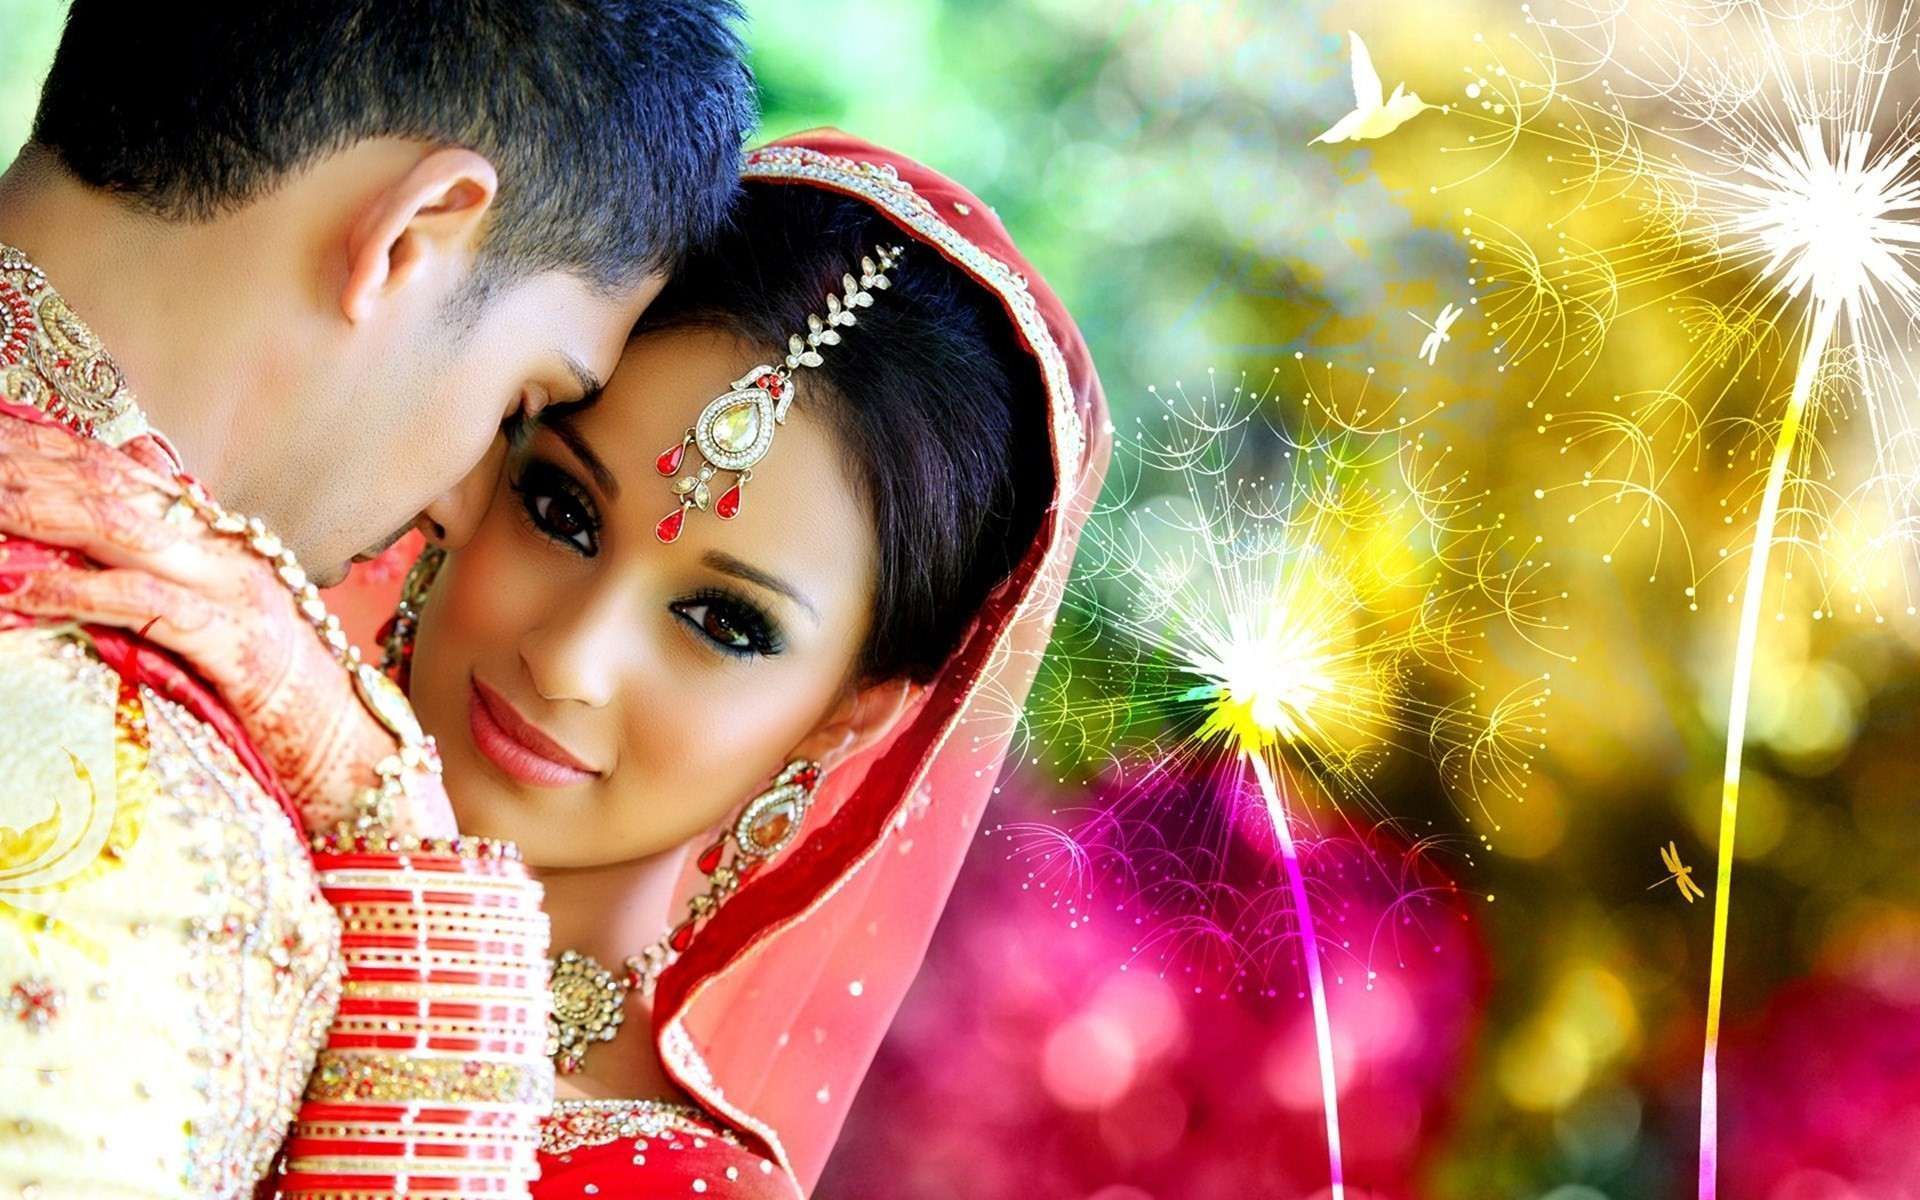 Wedding Photography Image Full HD. Indian wedding photography, Indian wedding couple photography, Photography wallpaper